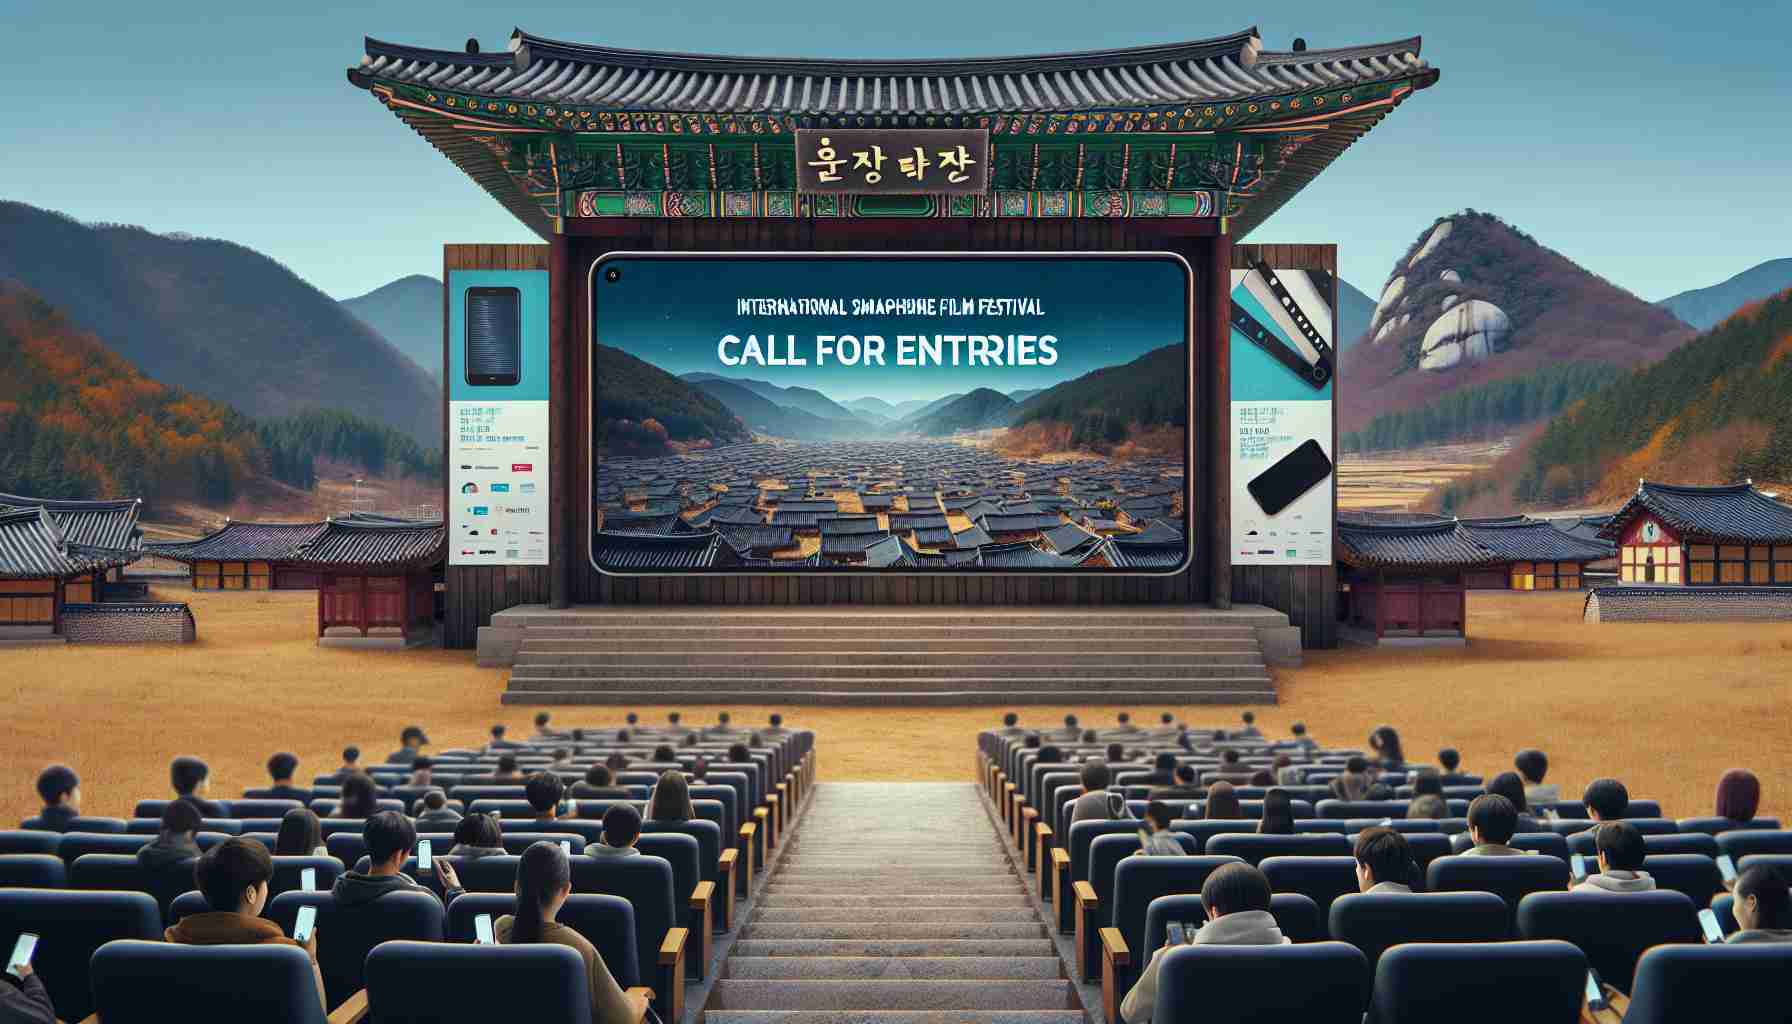 Yecheon International Smartphone Film Festival Calls for Entries